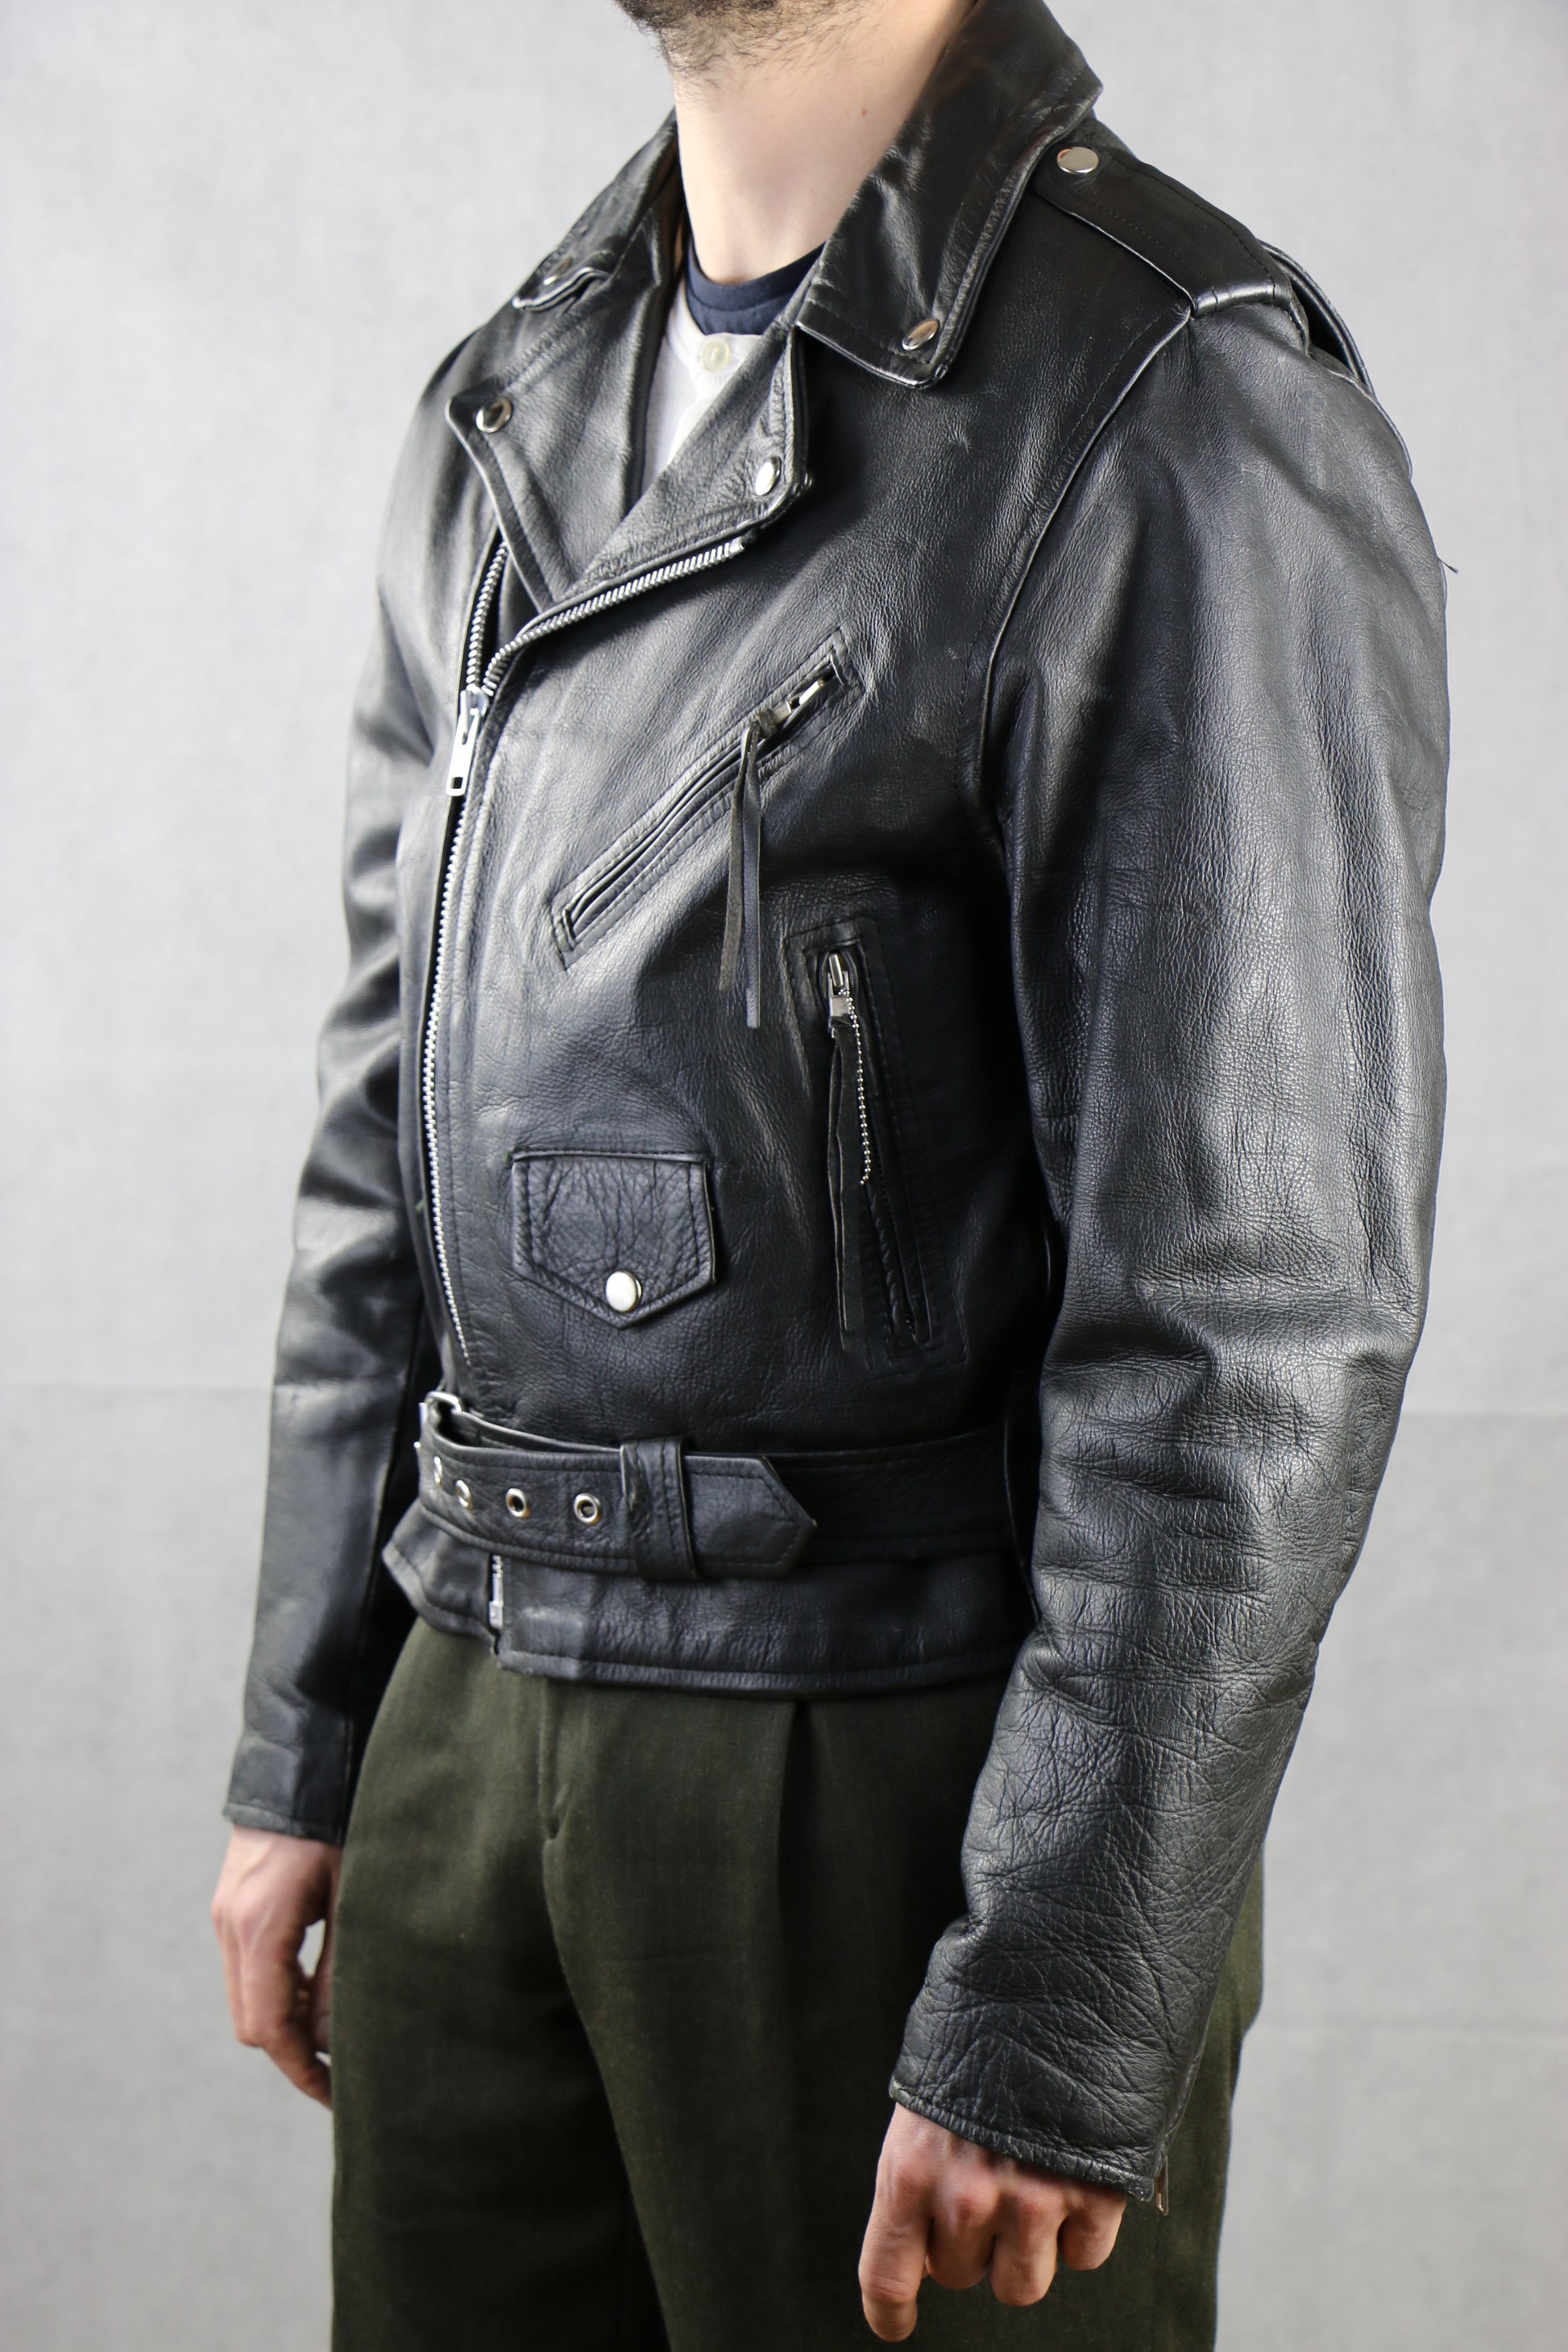 Biker Leather Jacket by Manzoor - vintage clothing clochard92.com